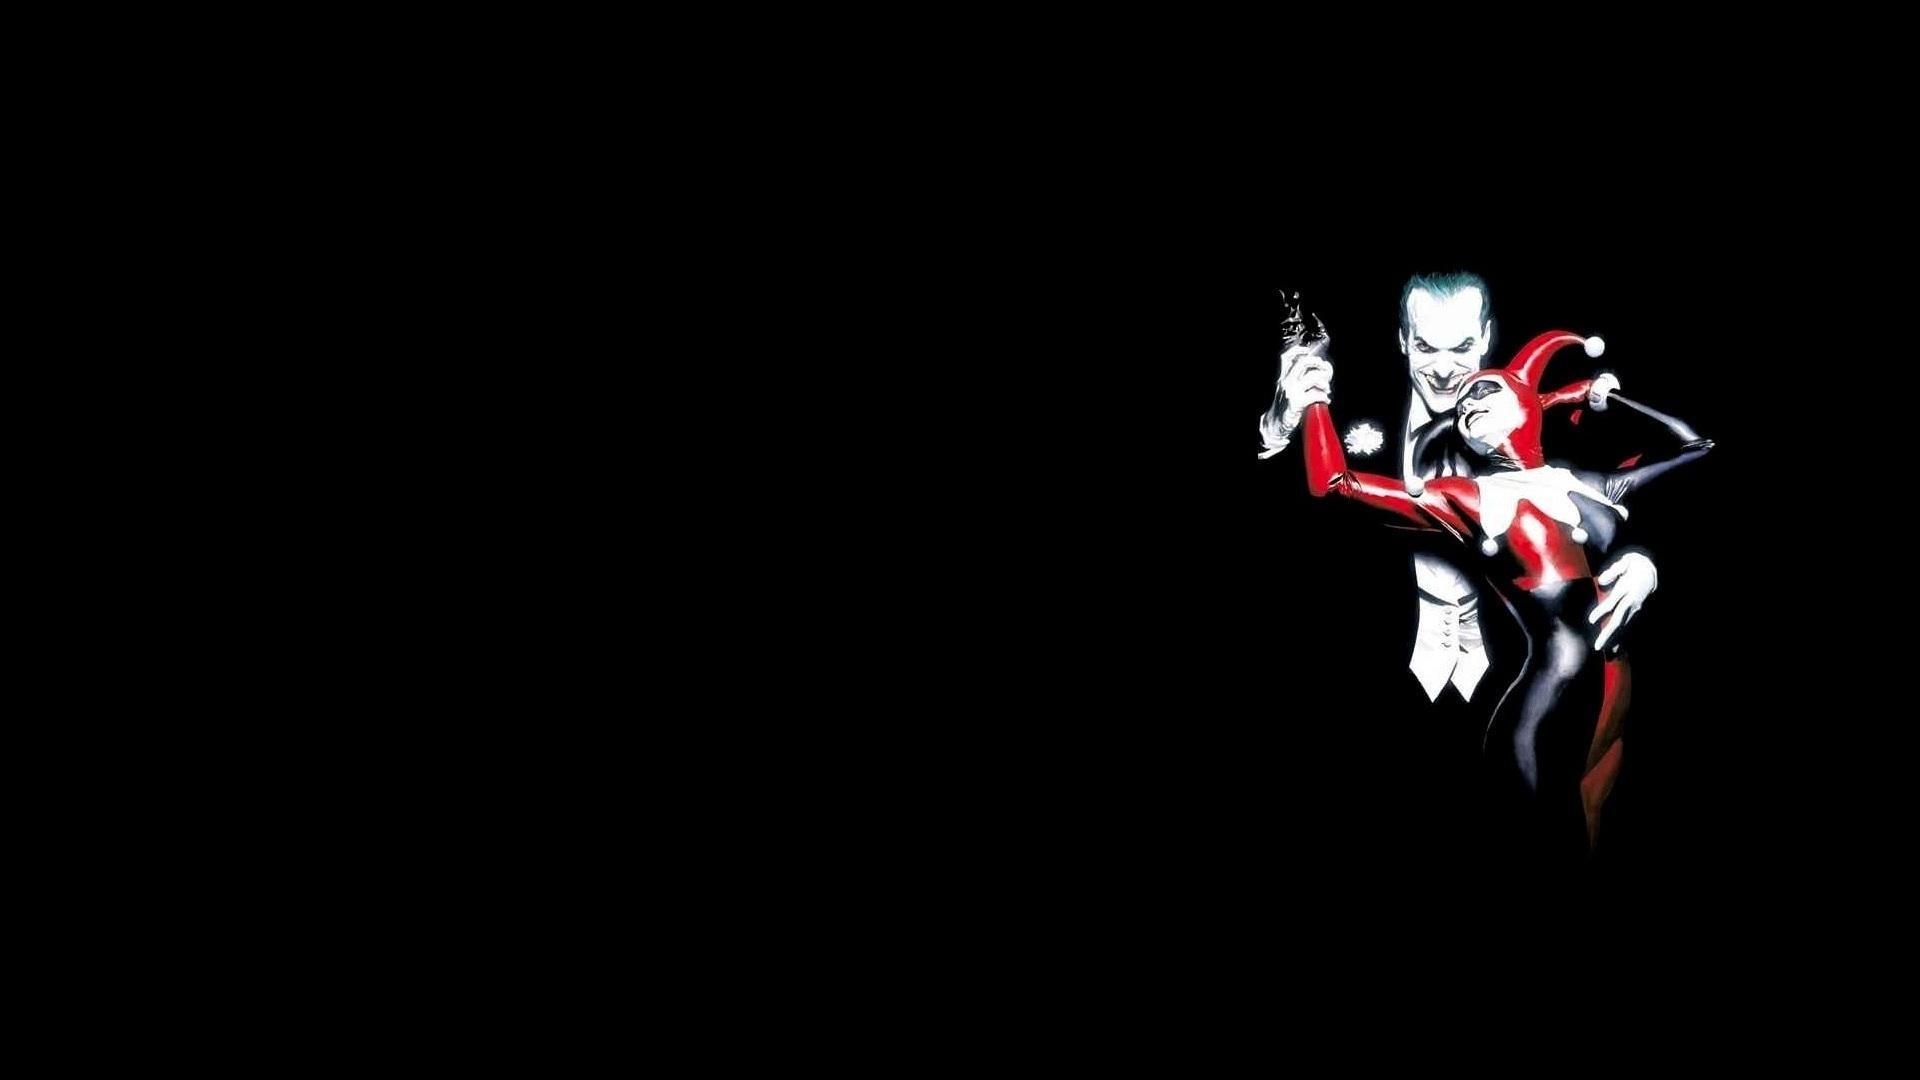 Joker harley quinn wallpaper